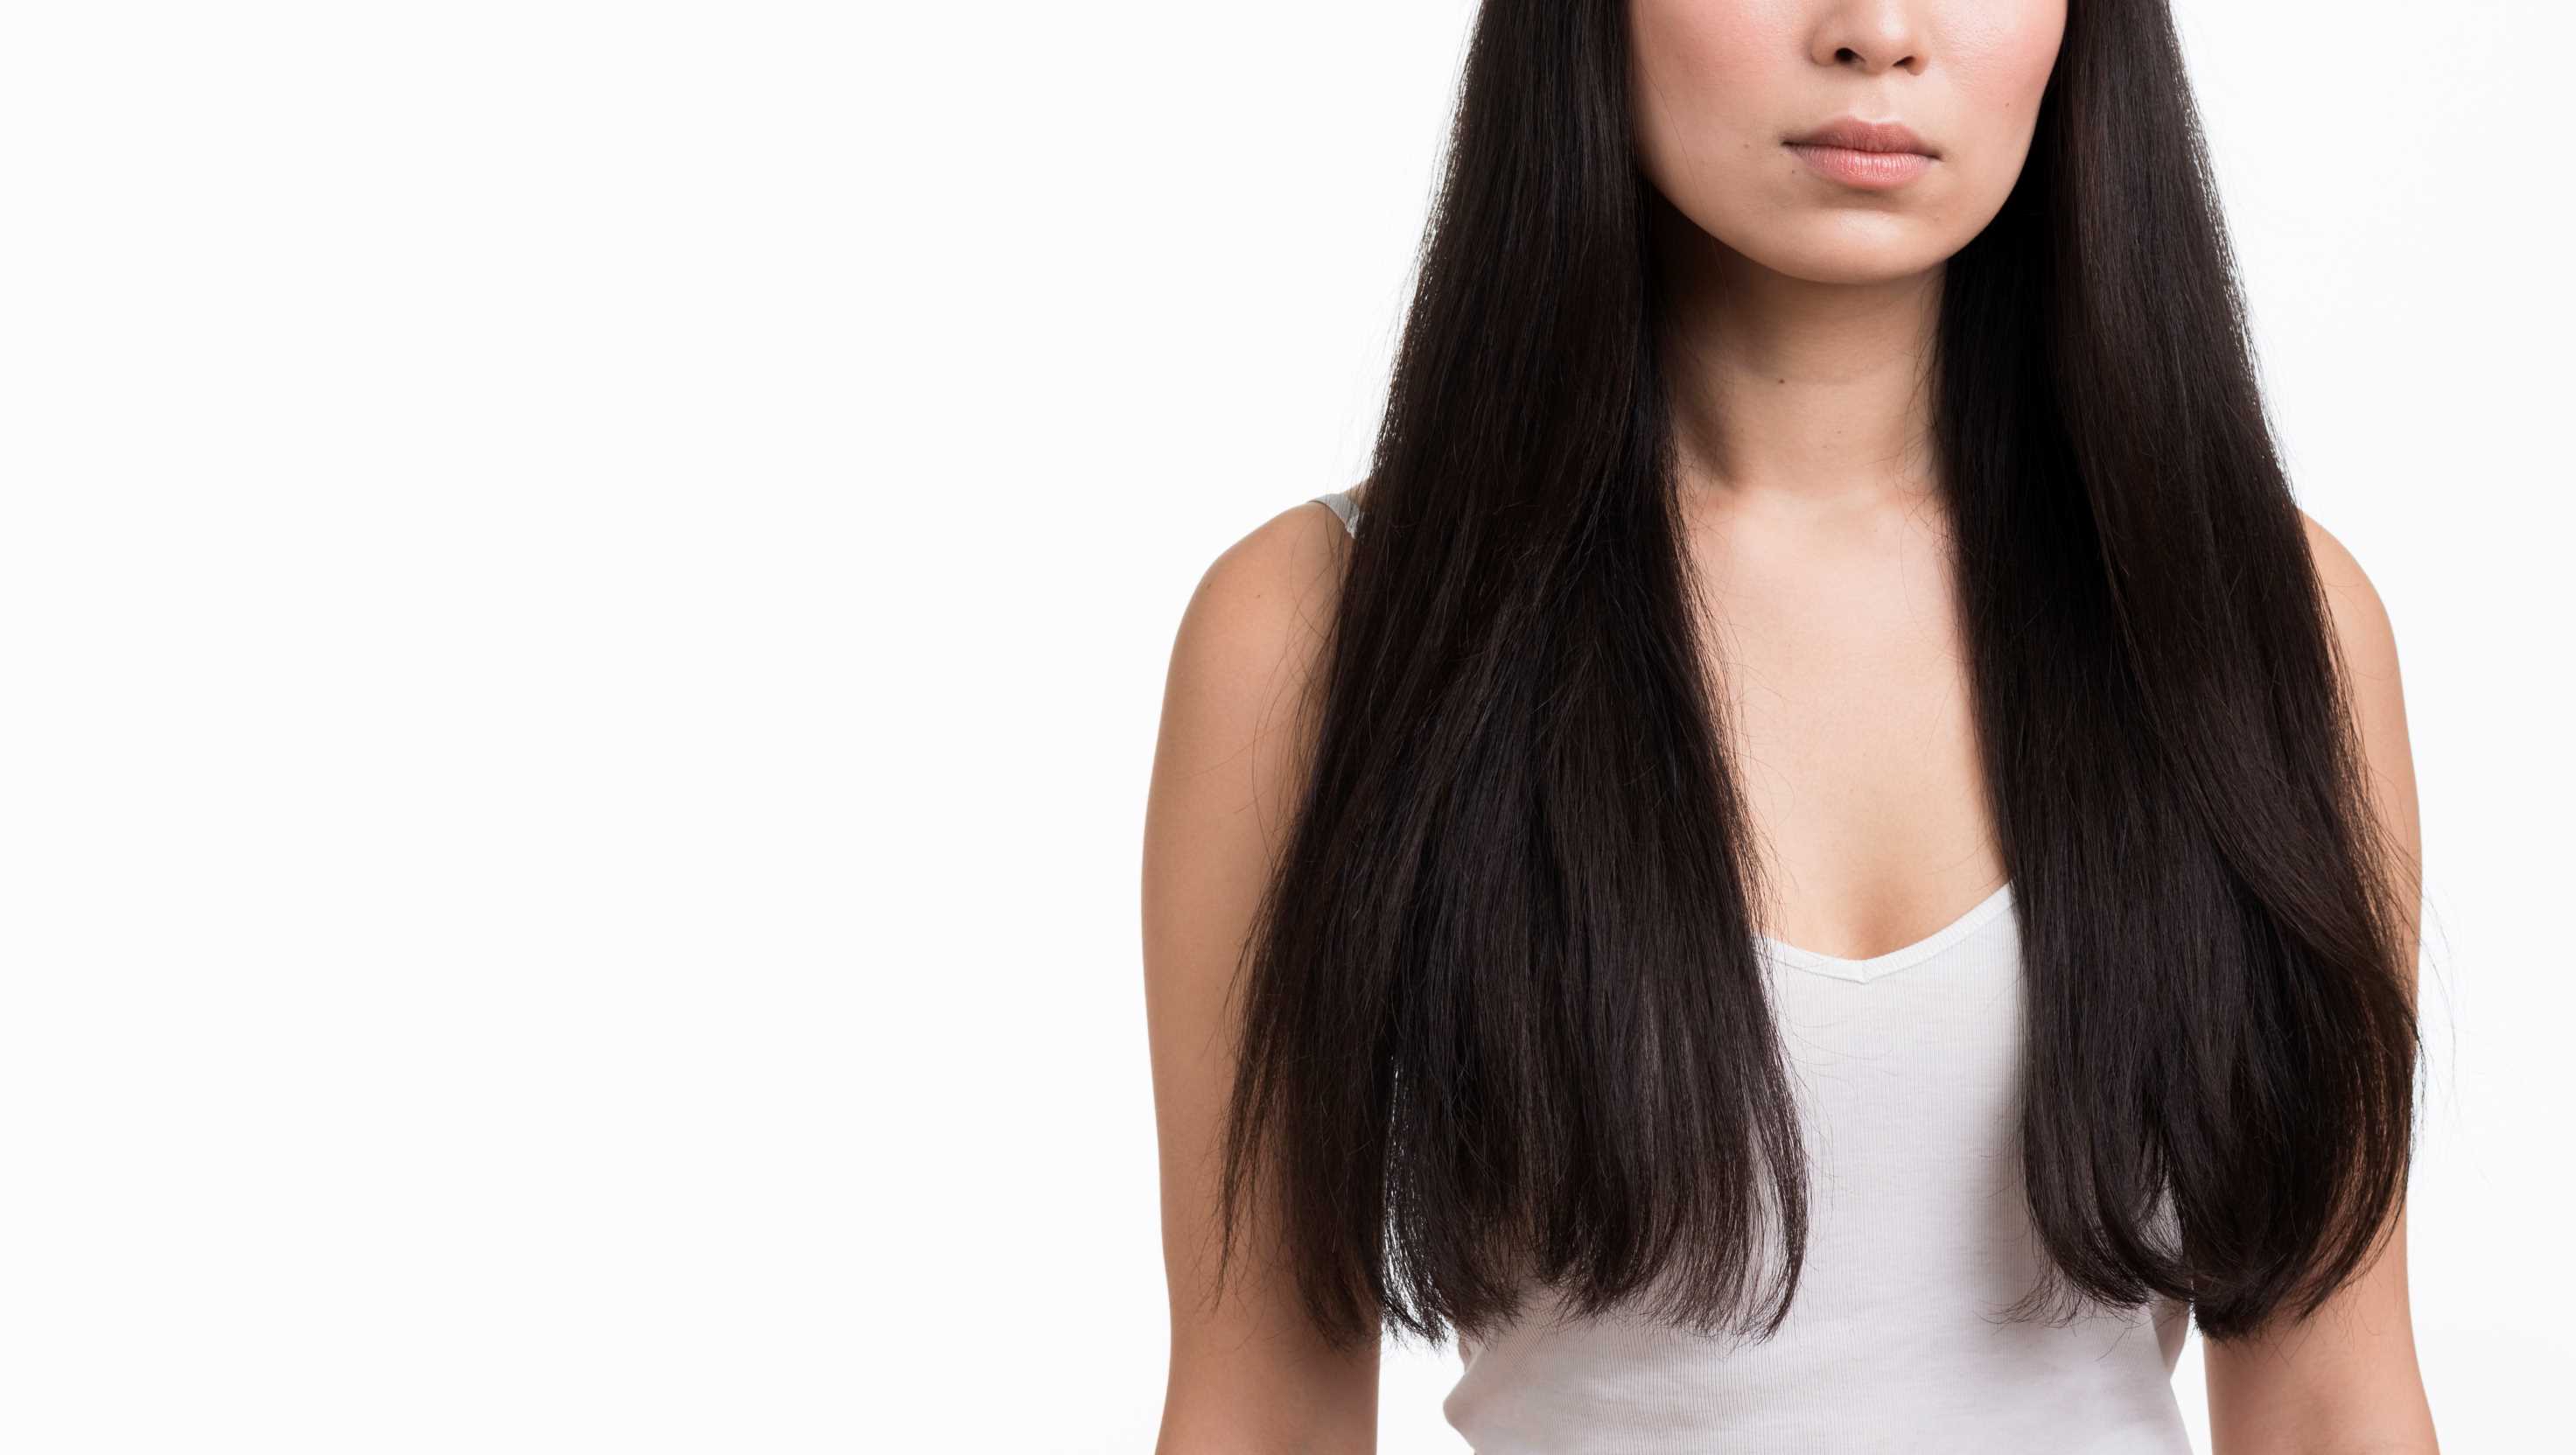 Inilah 8 Manfaat Vitamin E untuk Kulit dan Rambut, Efektif Lembapkan Kulit dan Kilaukan Rambut